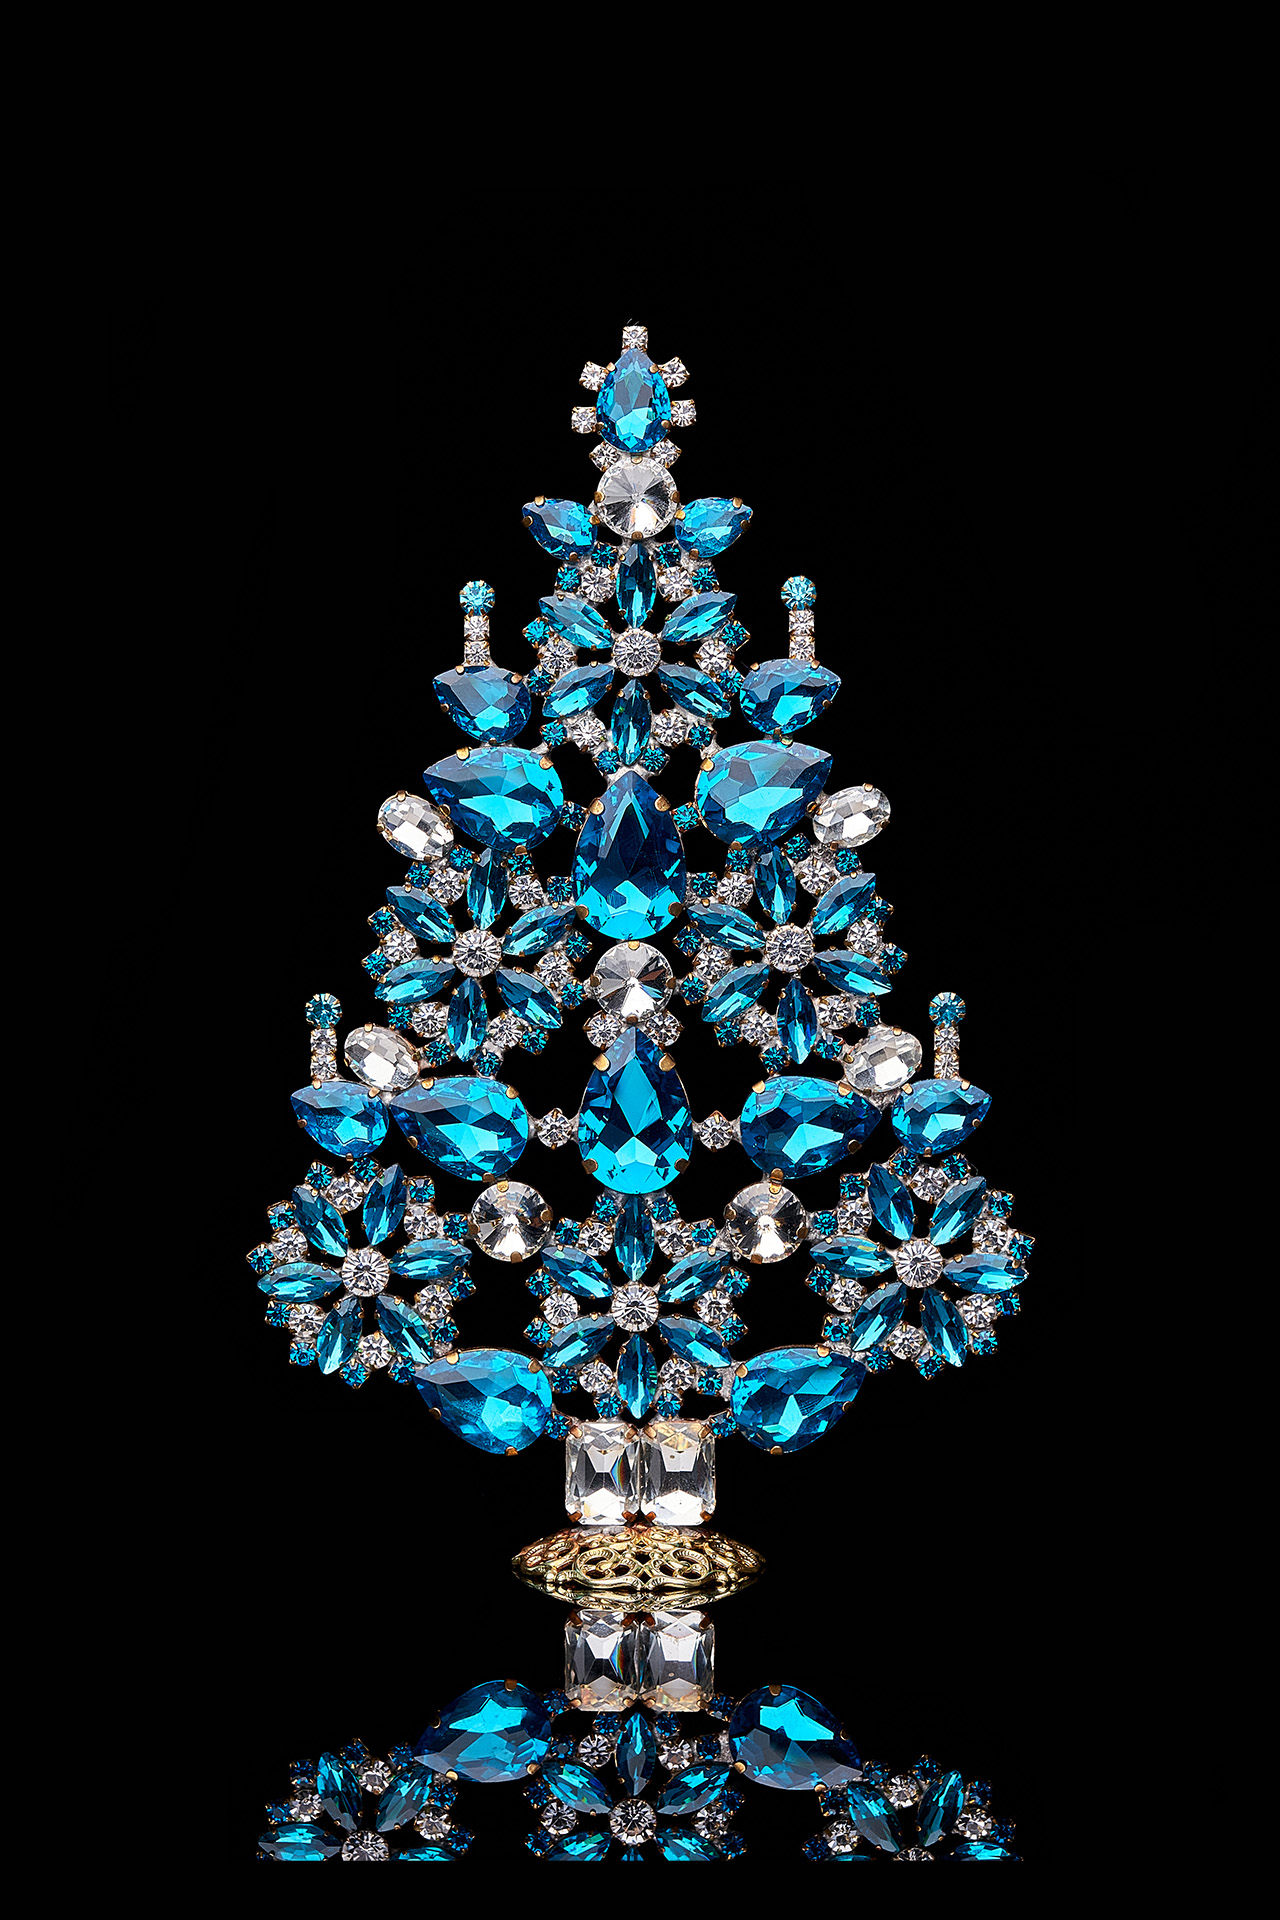 Handcrafted Christmas tree - Aqua crystals